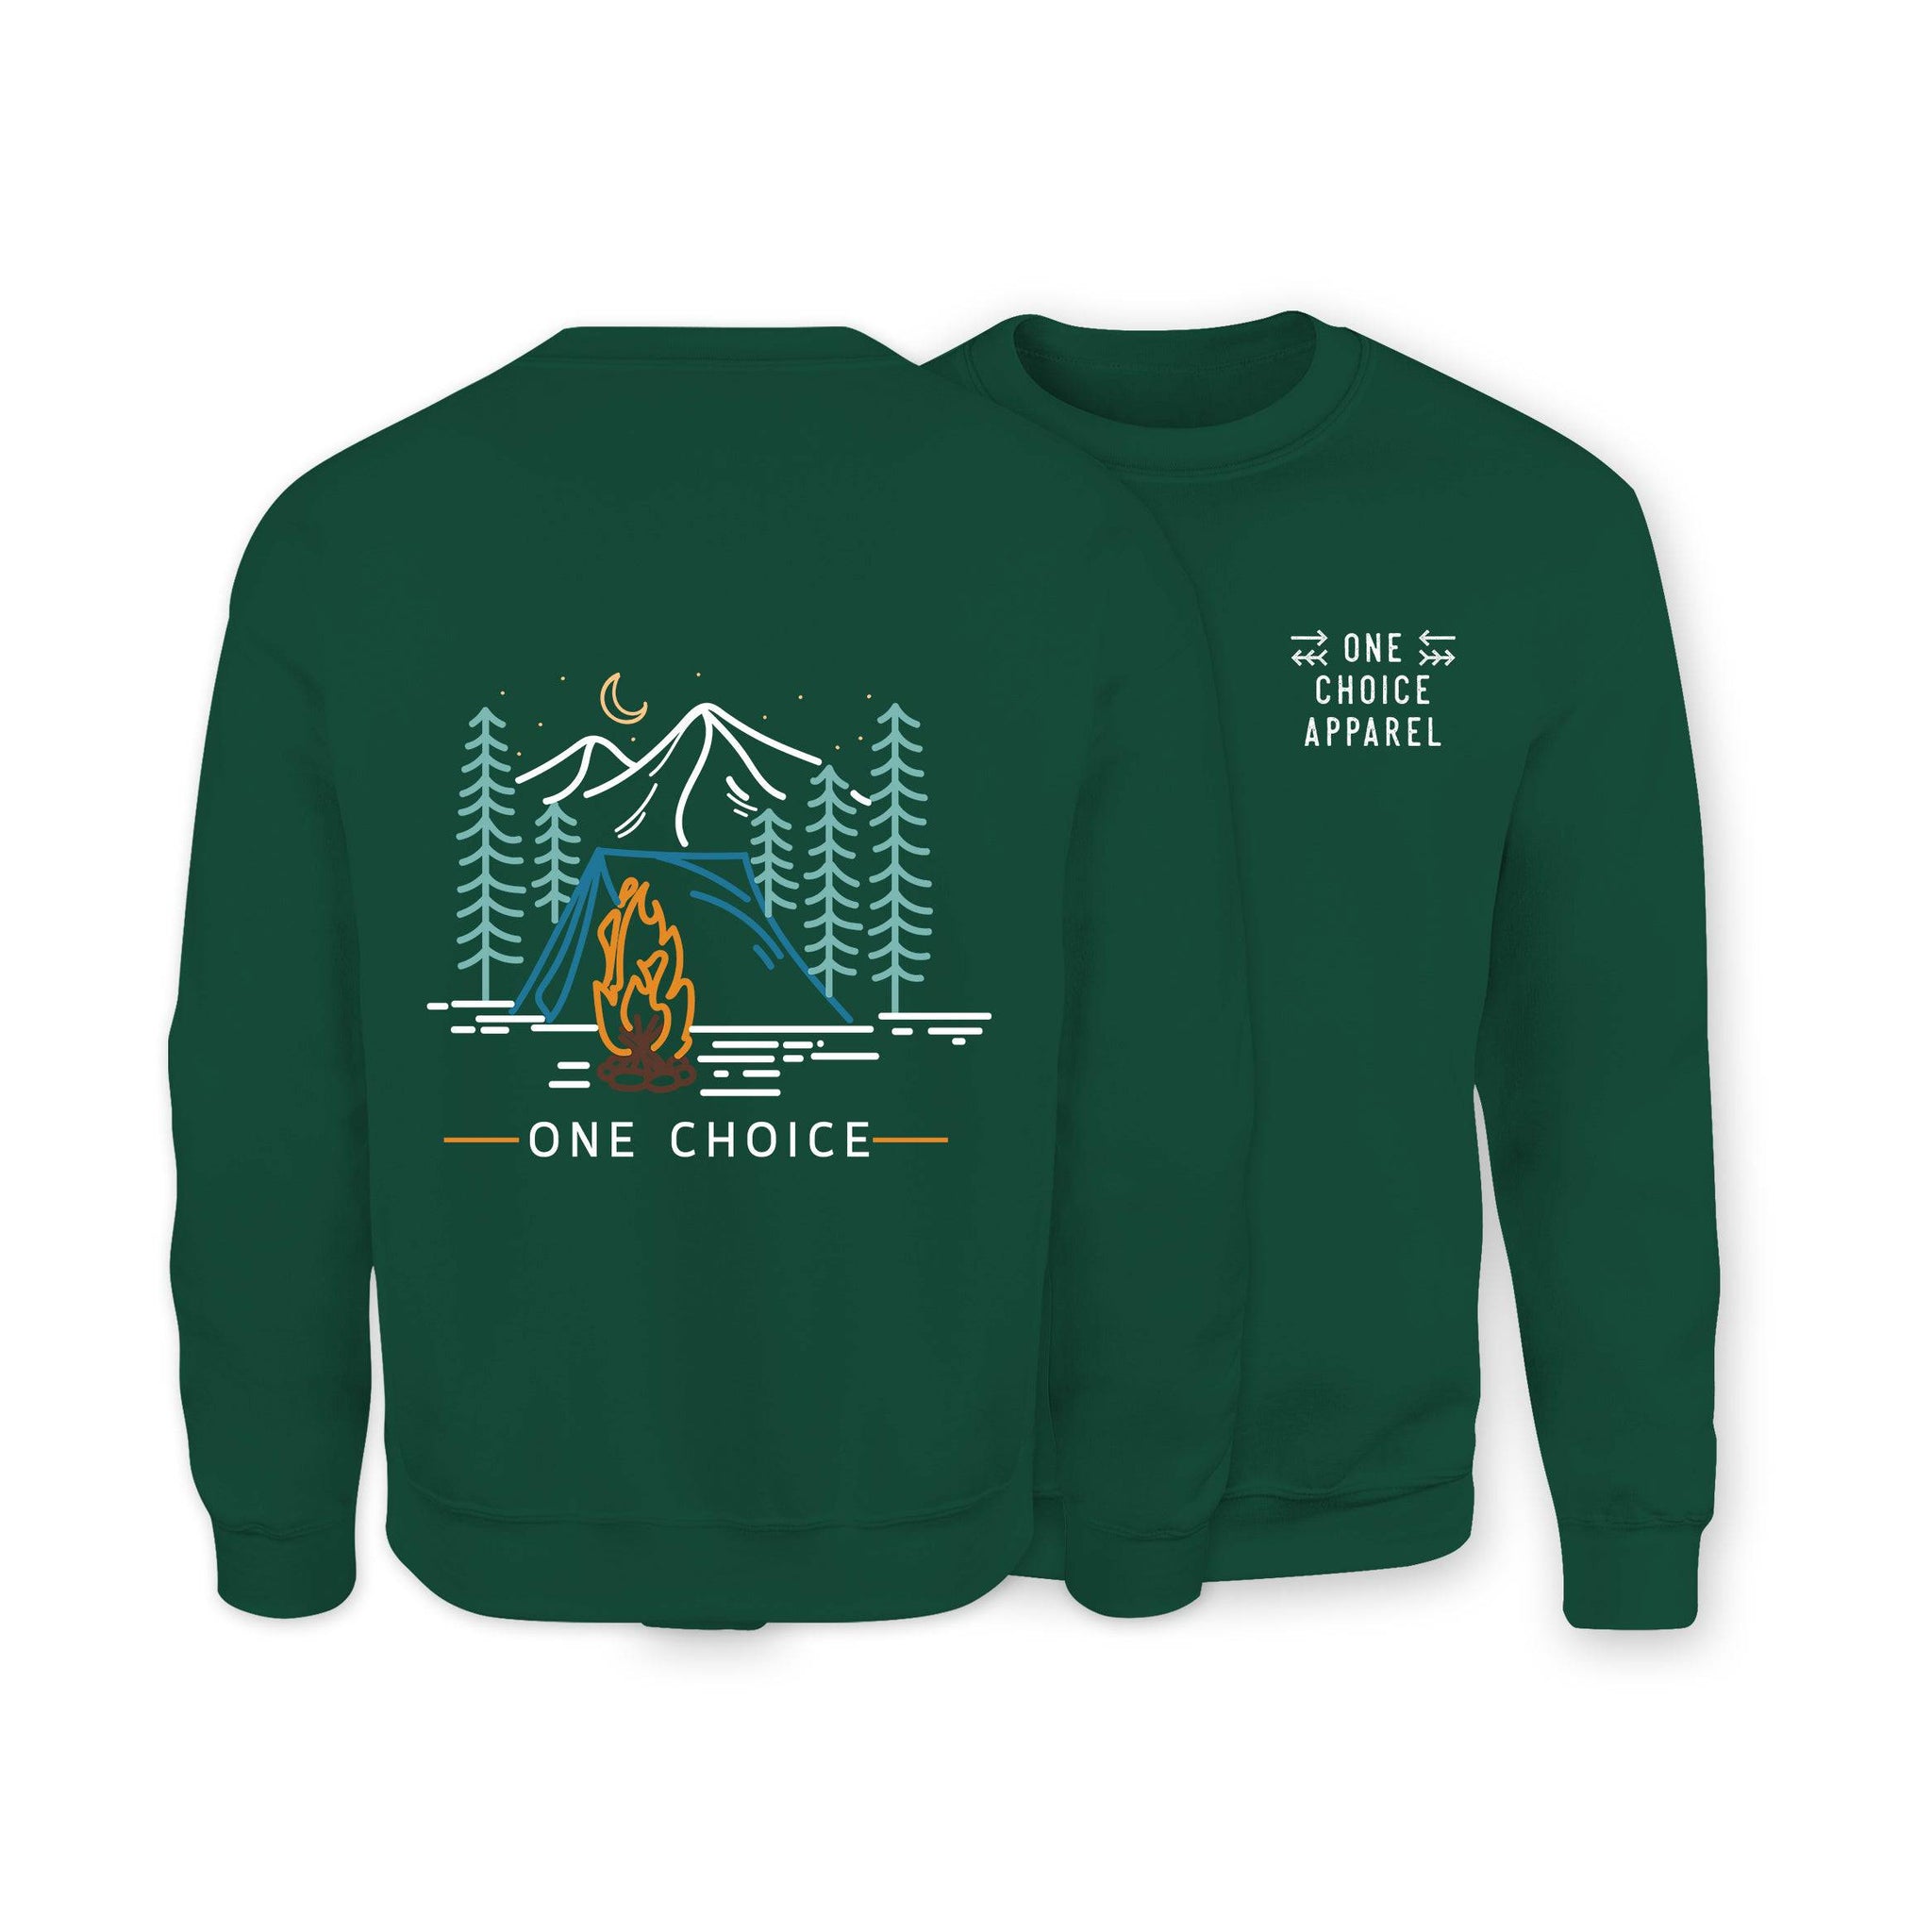 Bonfire Scene Sweatshirt - Organic Cotton Sweatshirt - One Choice Apparel